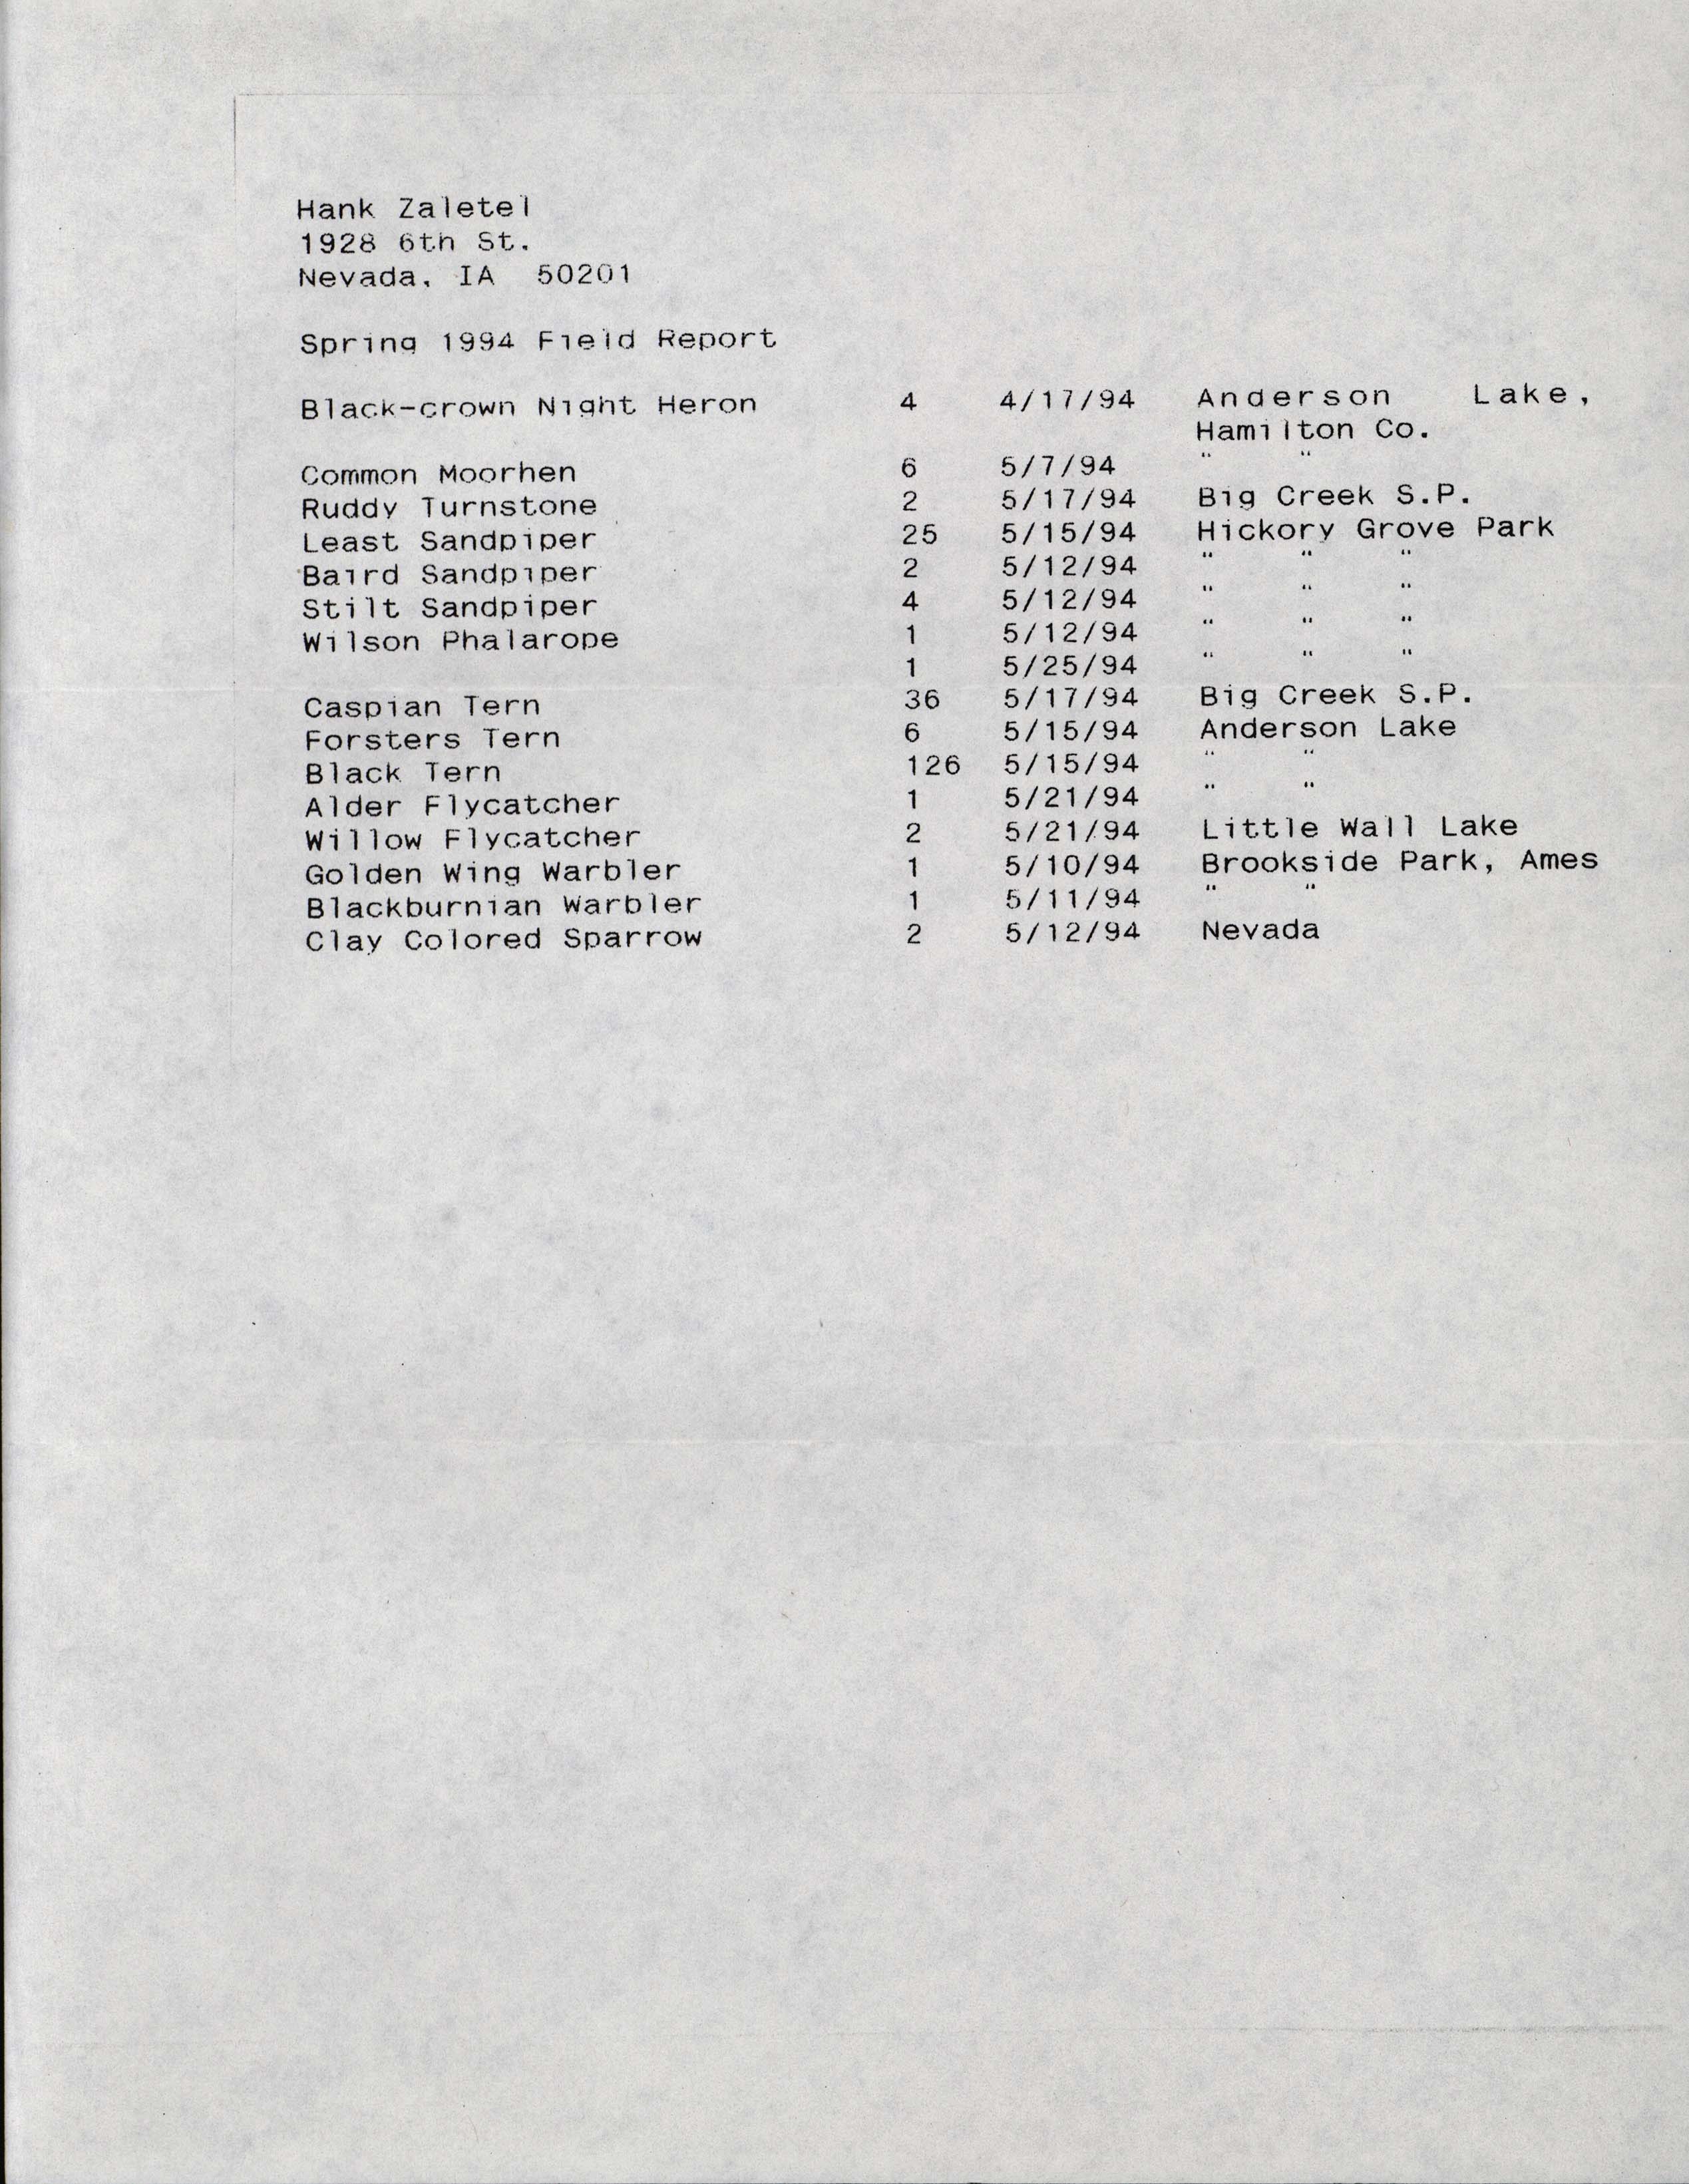 Spring 1994 field report, Hank Zaletel